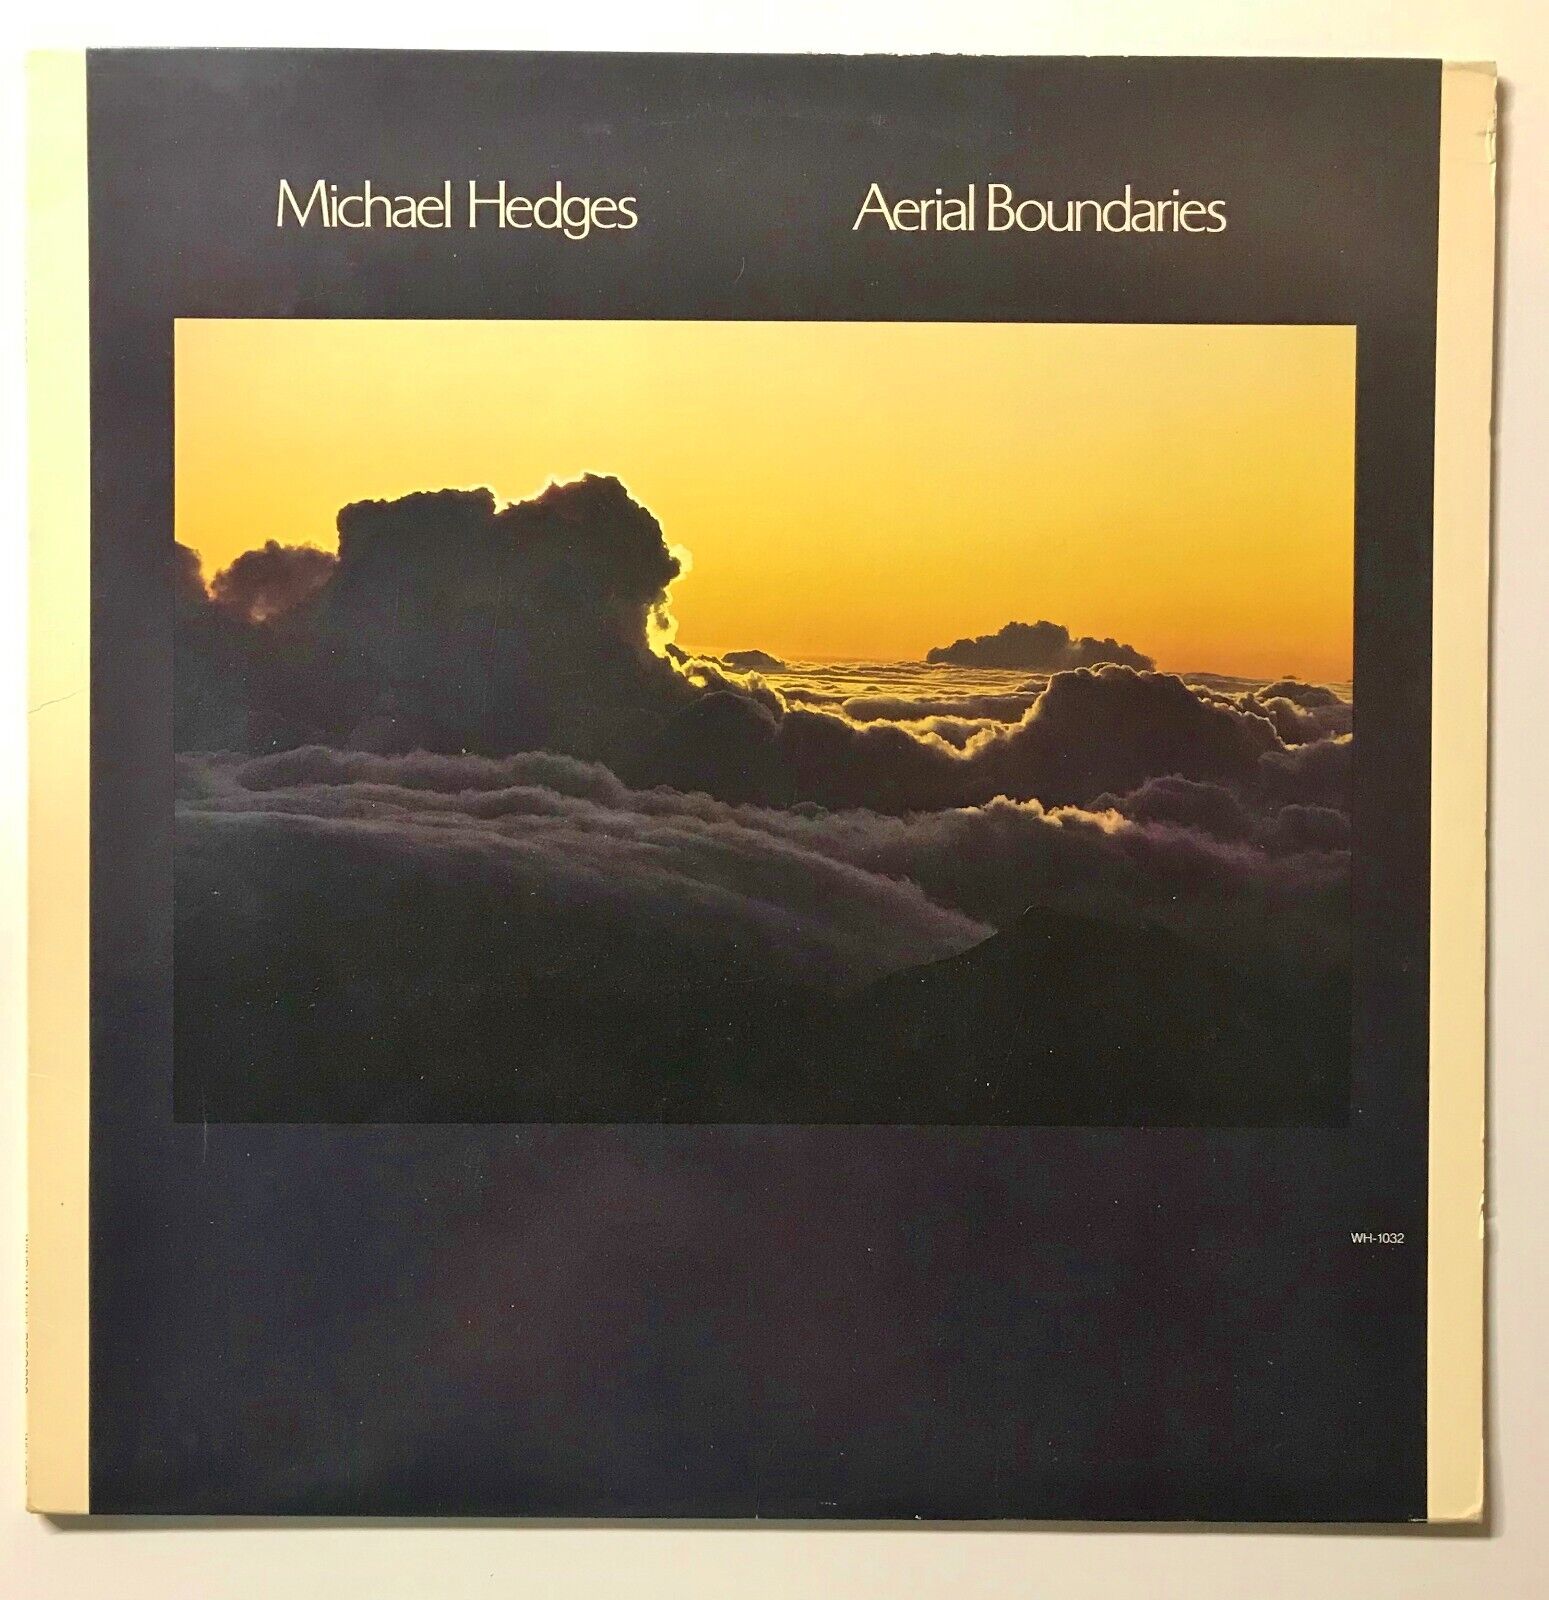 Michael Hedges Aerial Boundaries Windham Hill LP 1984